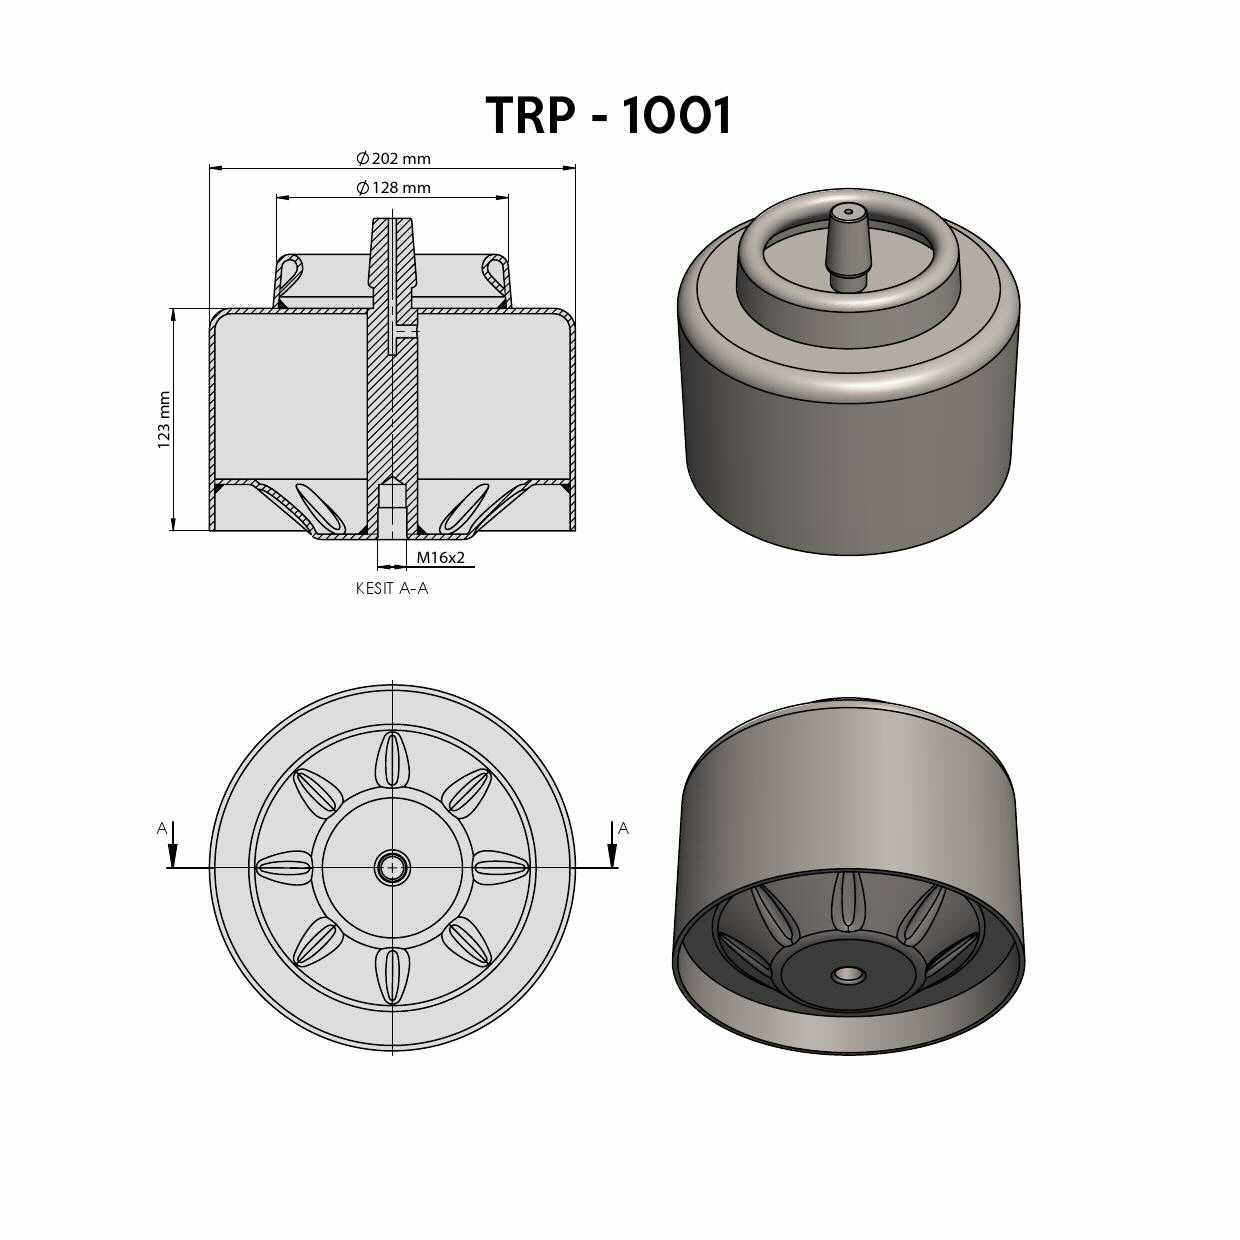 TRP-1001